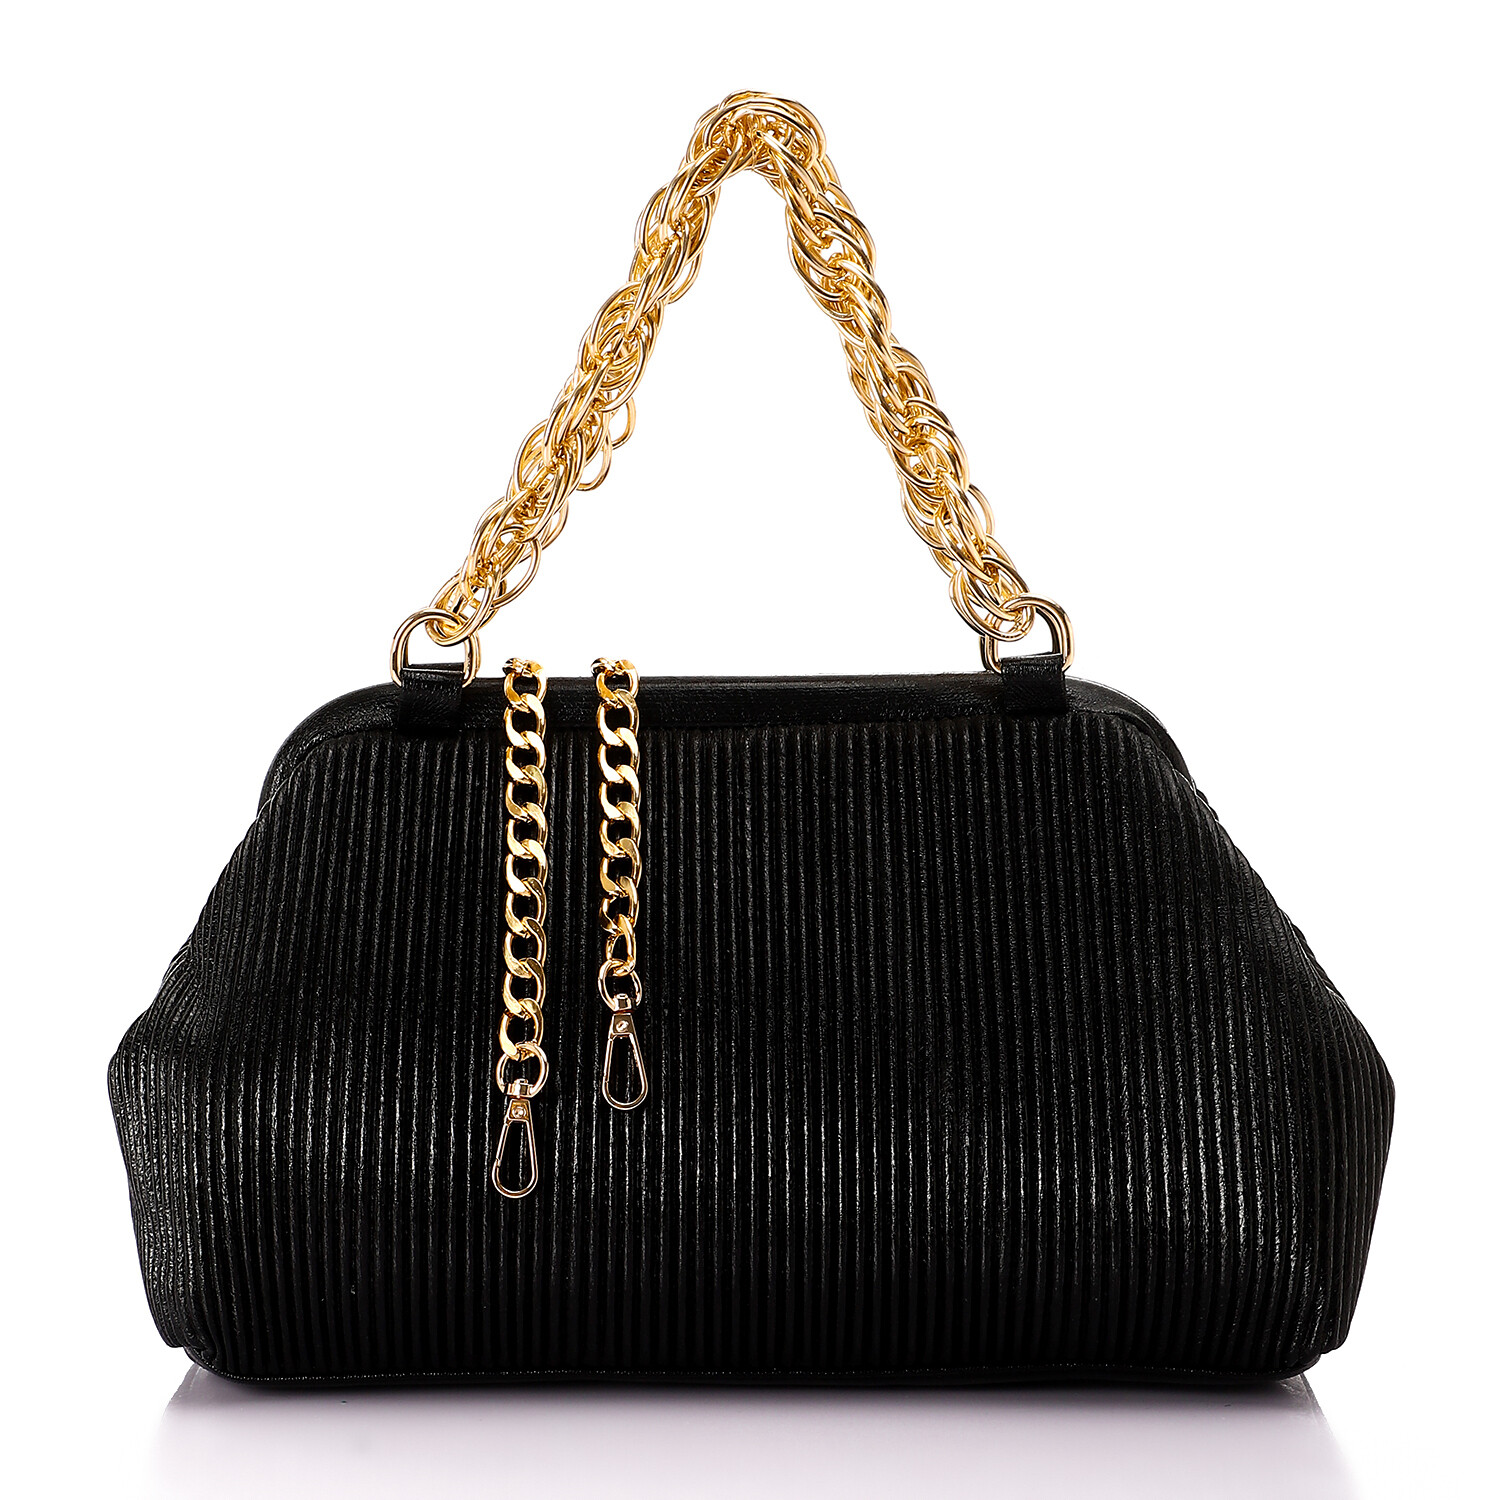 Ribbed Leather Fashionable Handbag - Black
-4951